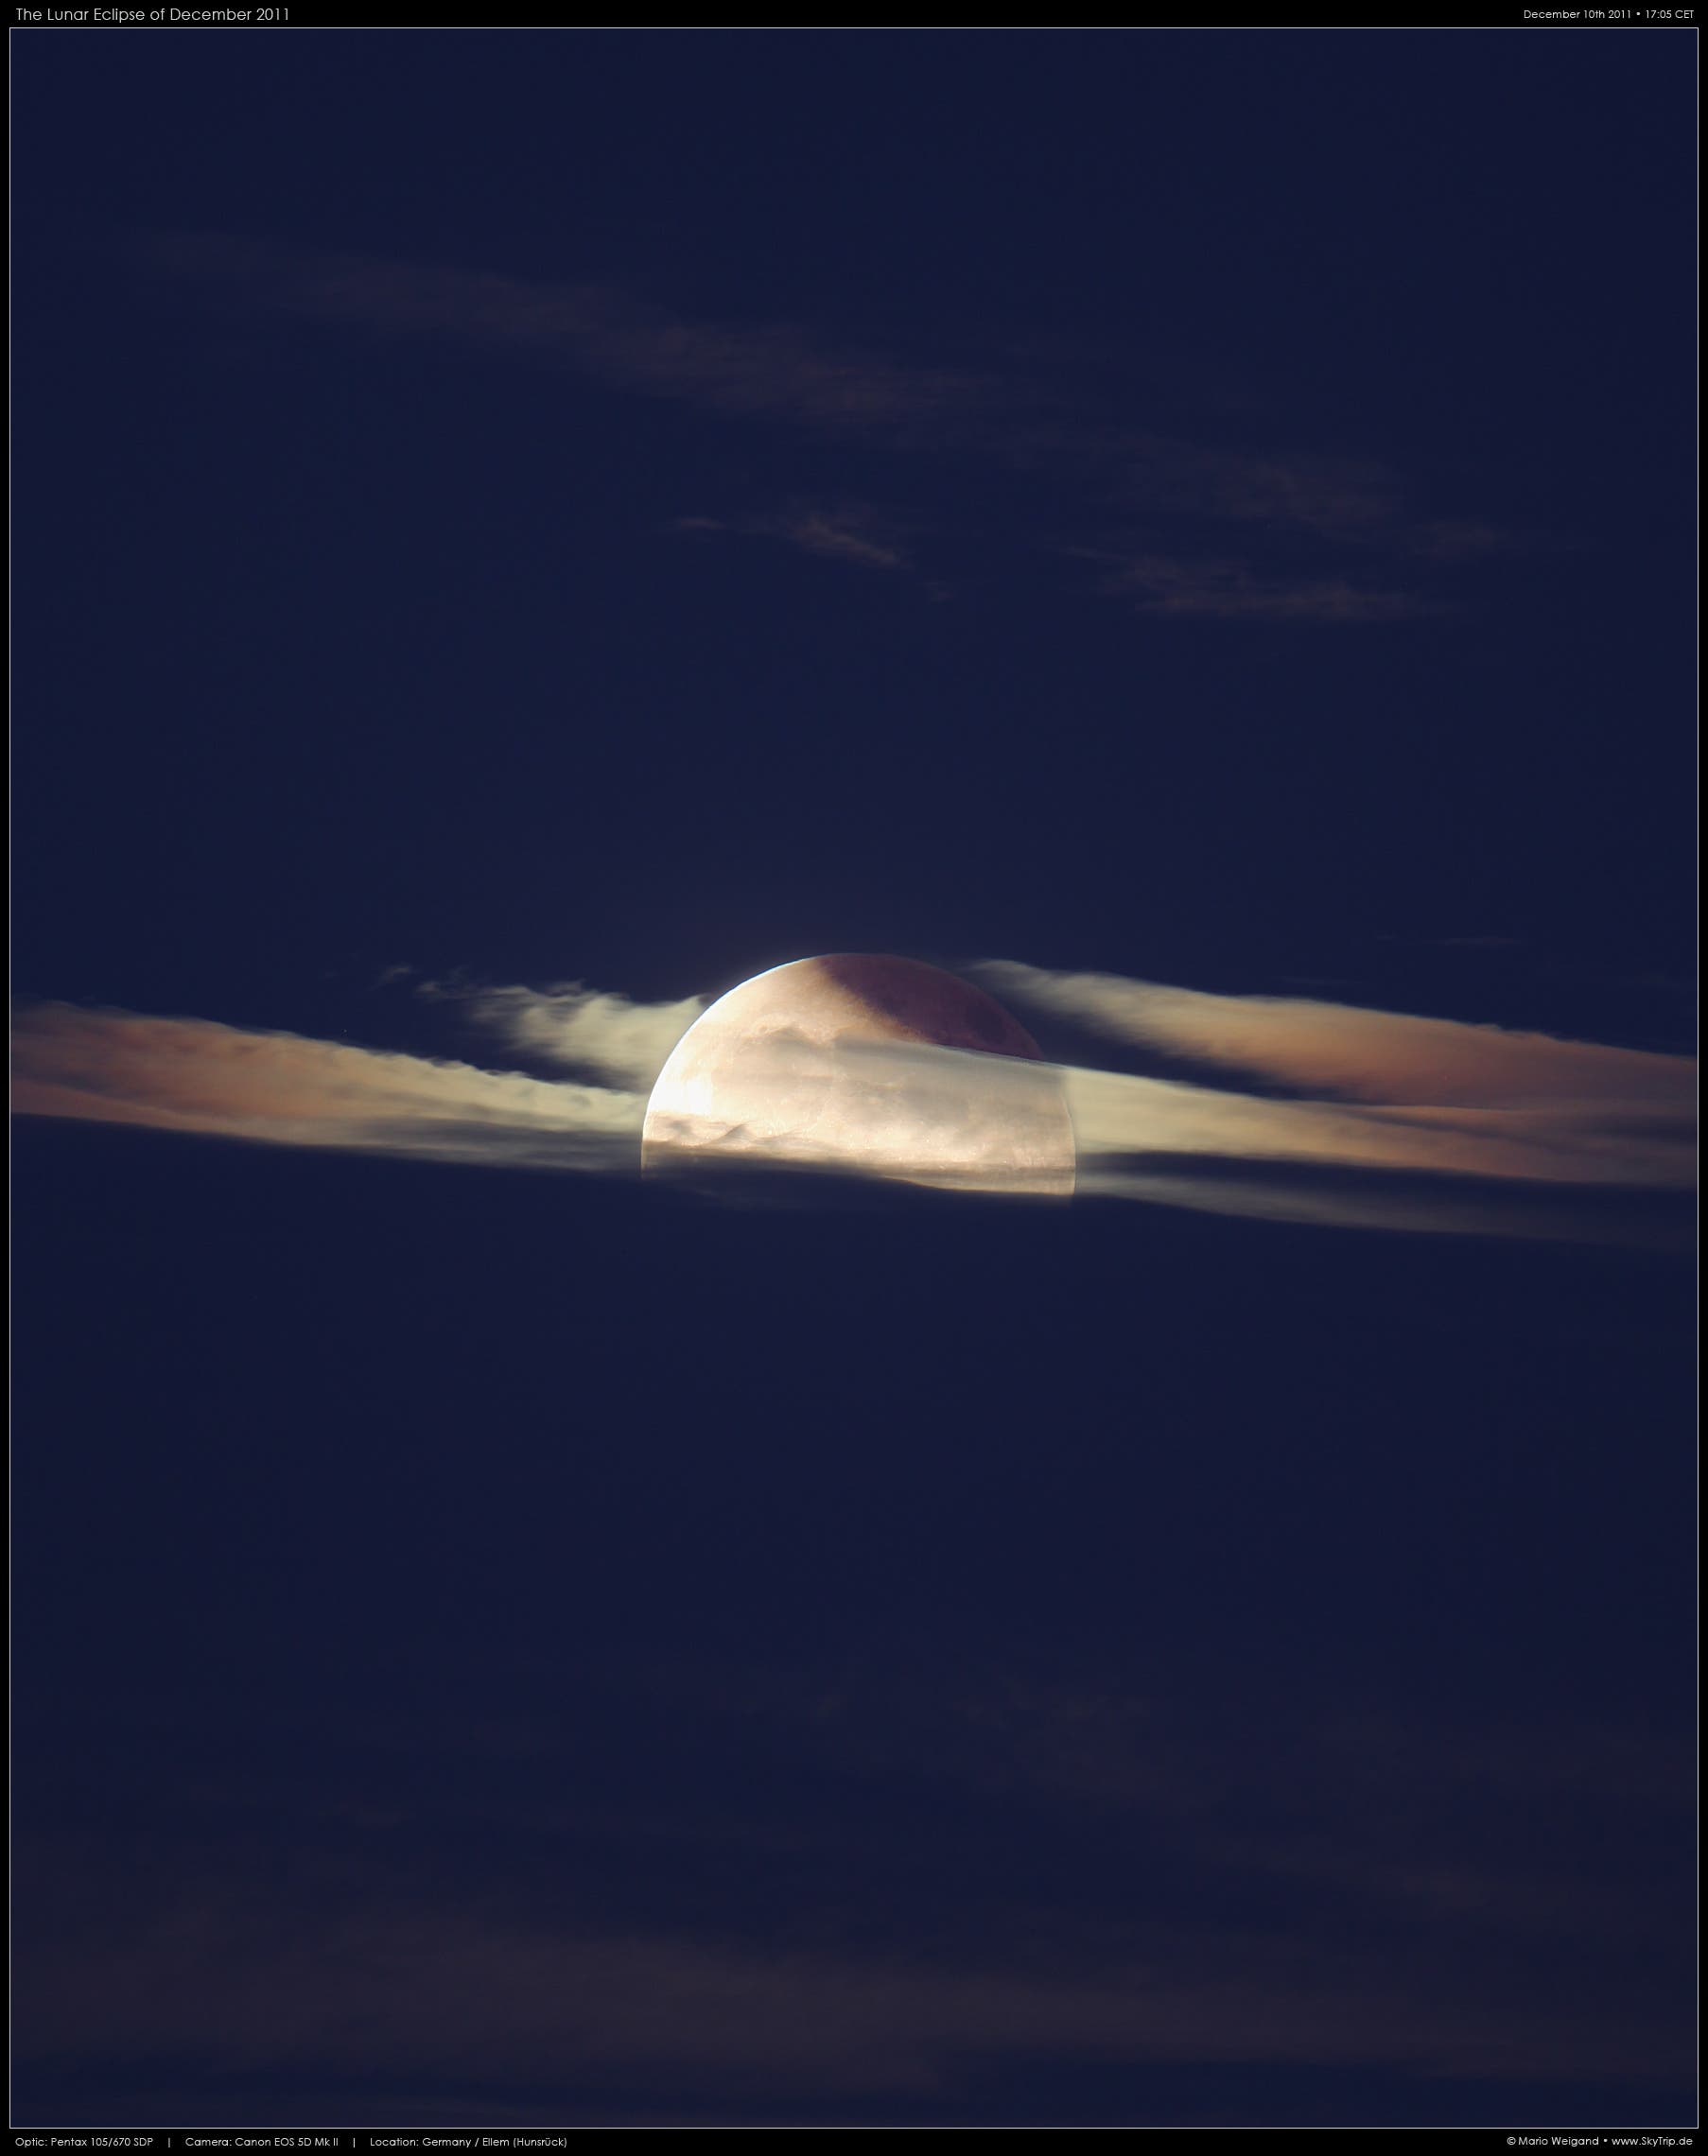 Mondfinsternis am Abendhimmel